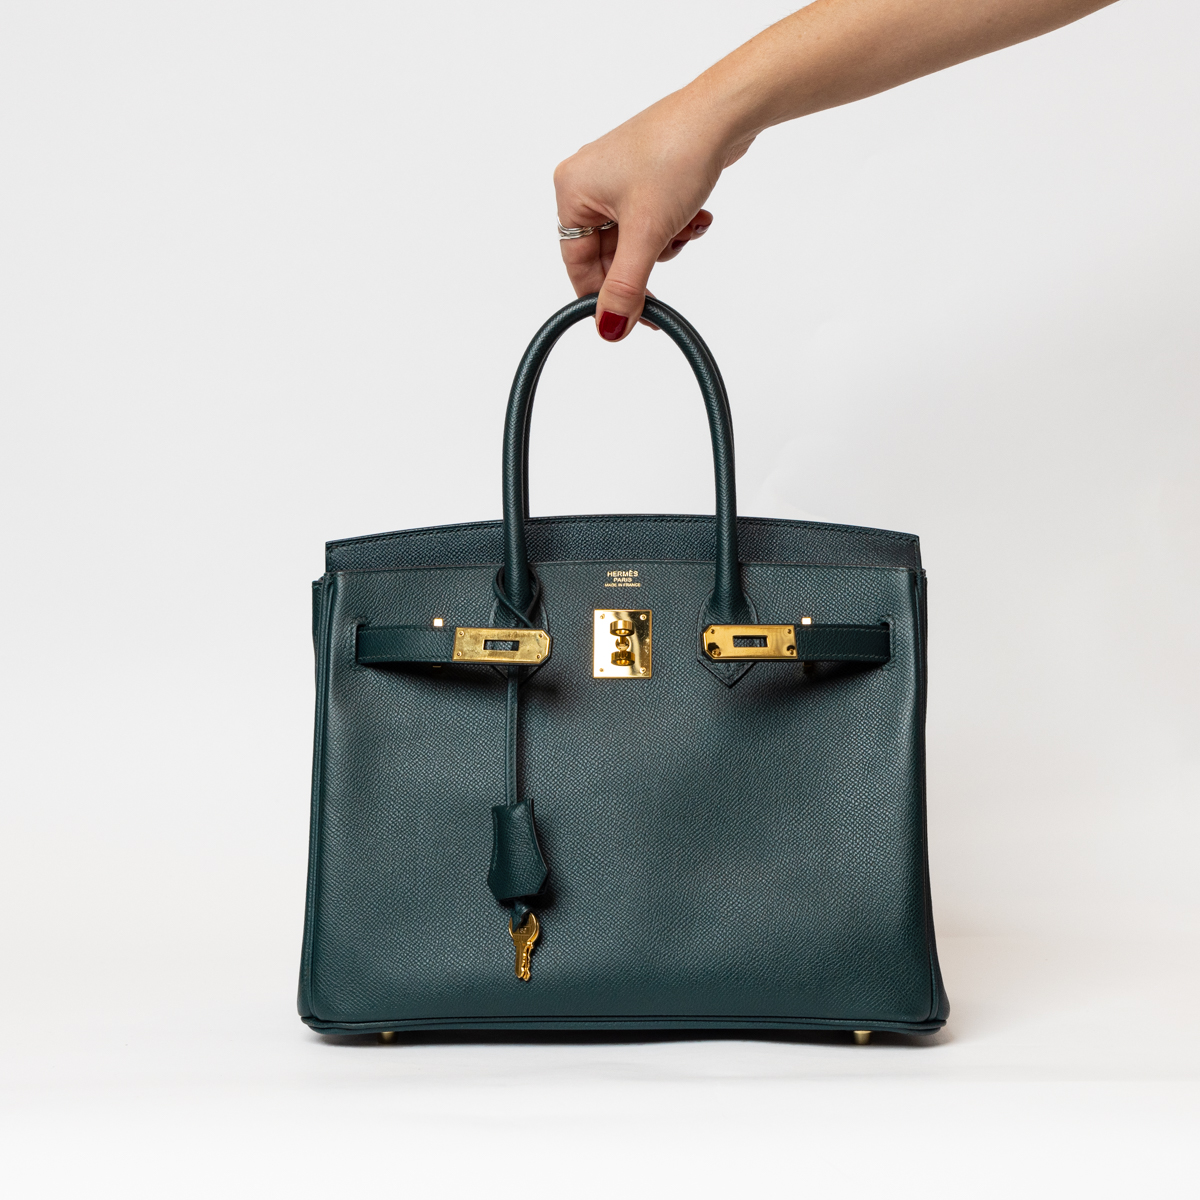 Hermès Birkin Bag 30 Vert Cypress with gold hardware 2019 Full Set